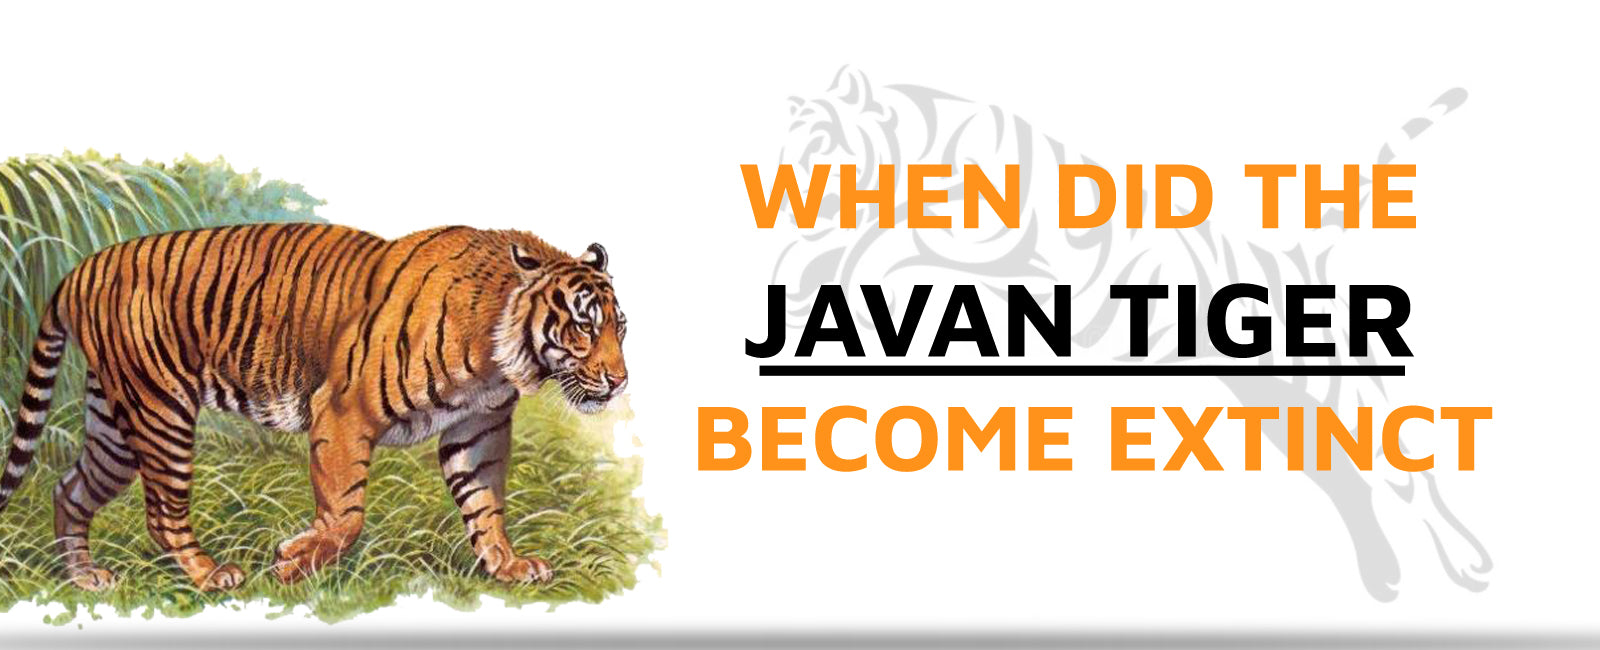 When did the Javan Tiger Become Extinct